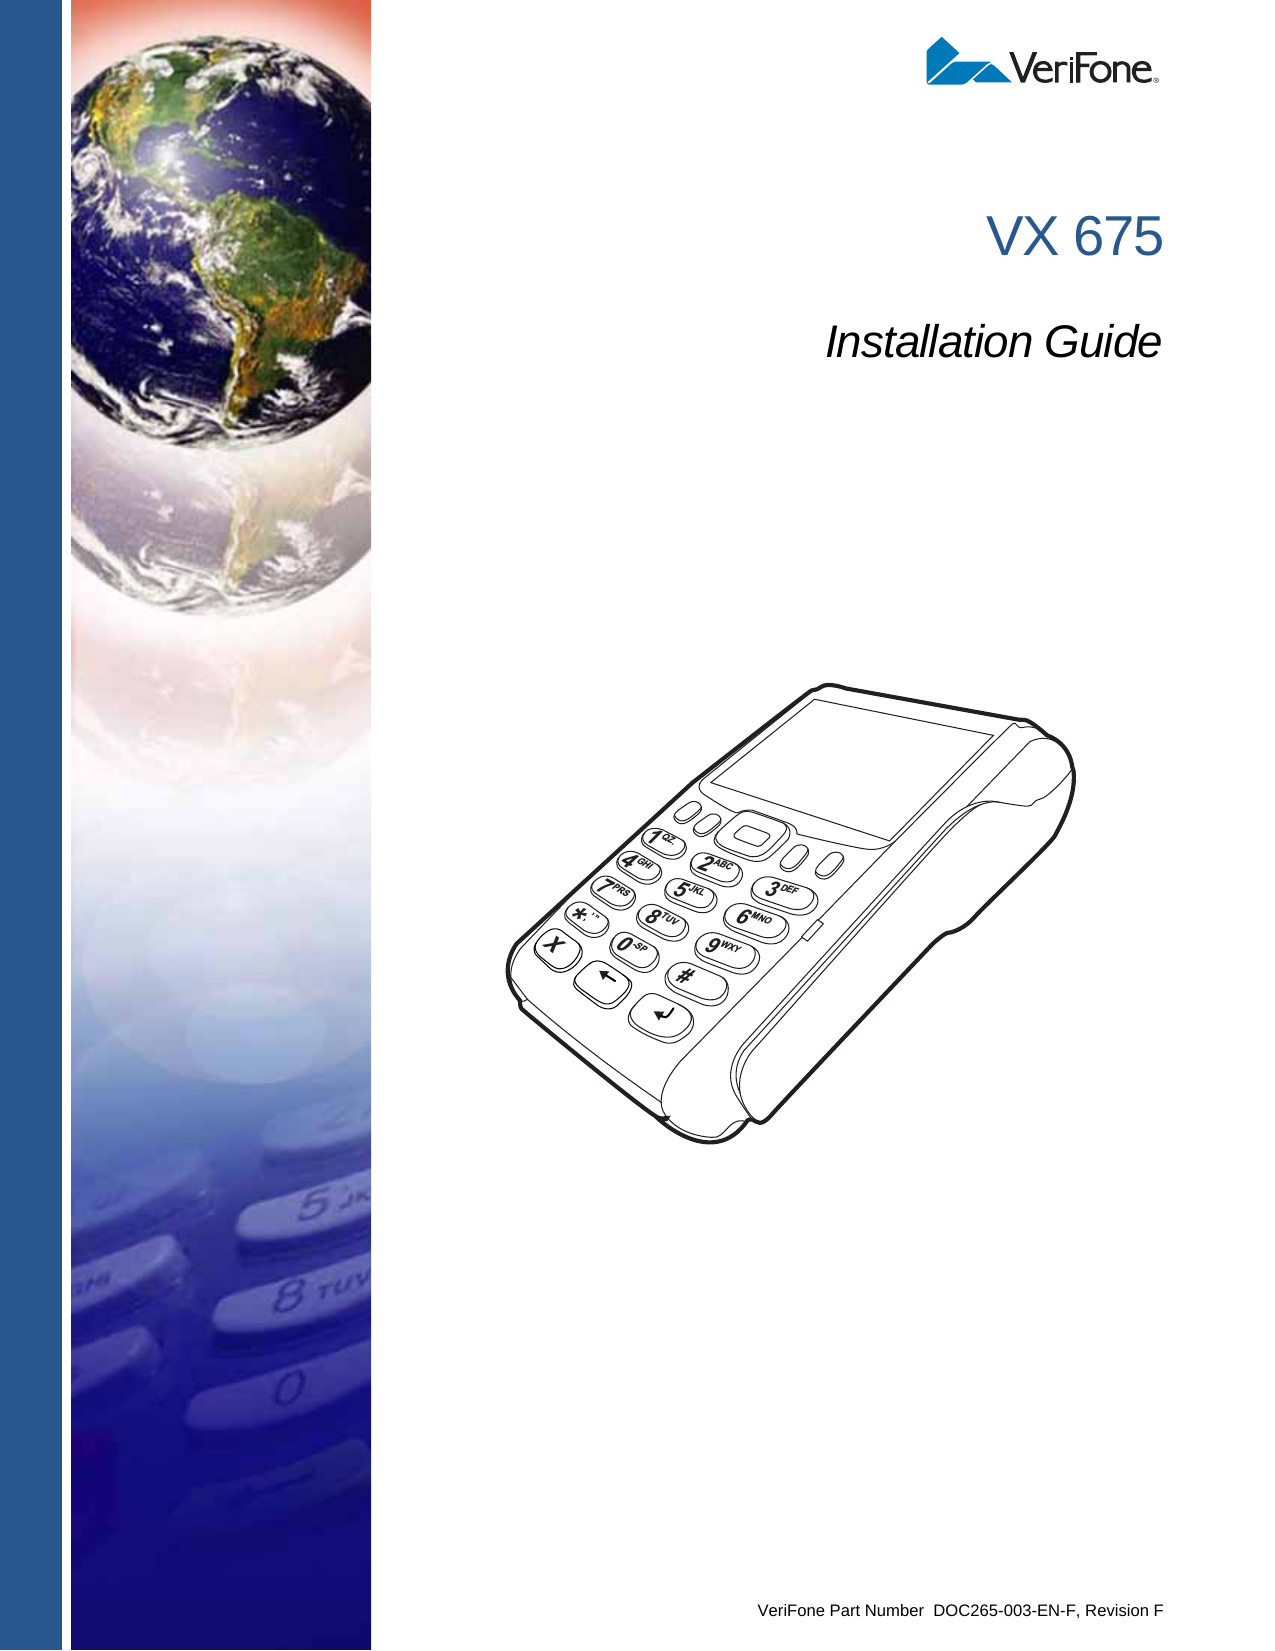 VeriFone Part Number  DOC265-003-EN-F, Revision FVX 675Installation Guide3DEF2ABC1QZ.4GHI7PRS*5JKL8TUV0-SPX6MNO9WXY# ’ ” ’ 